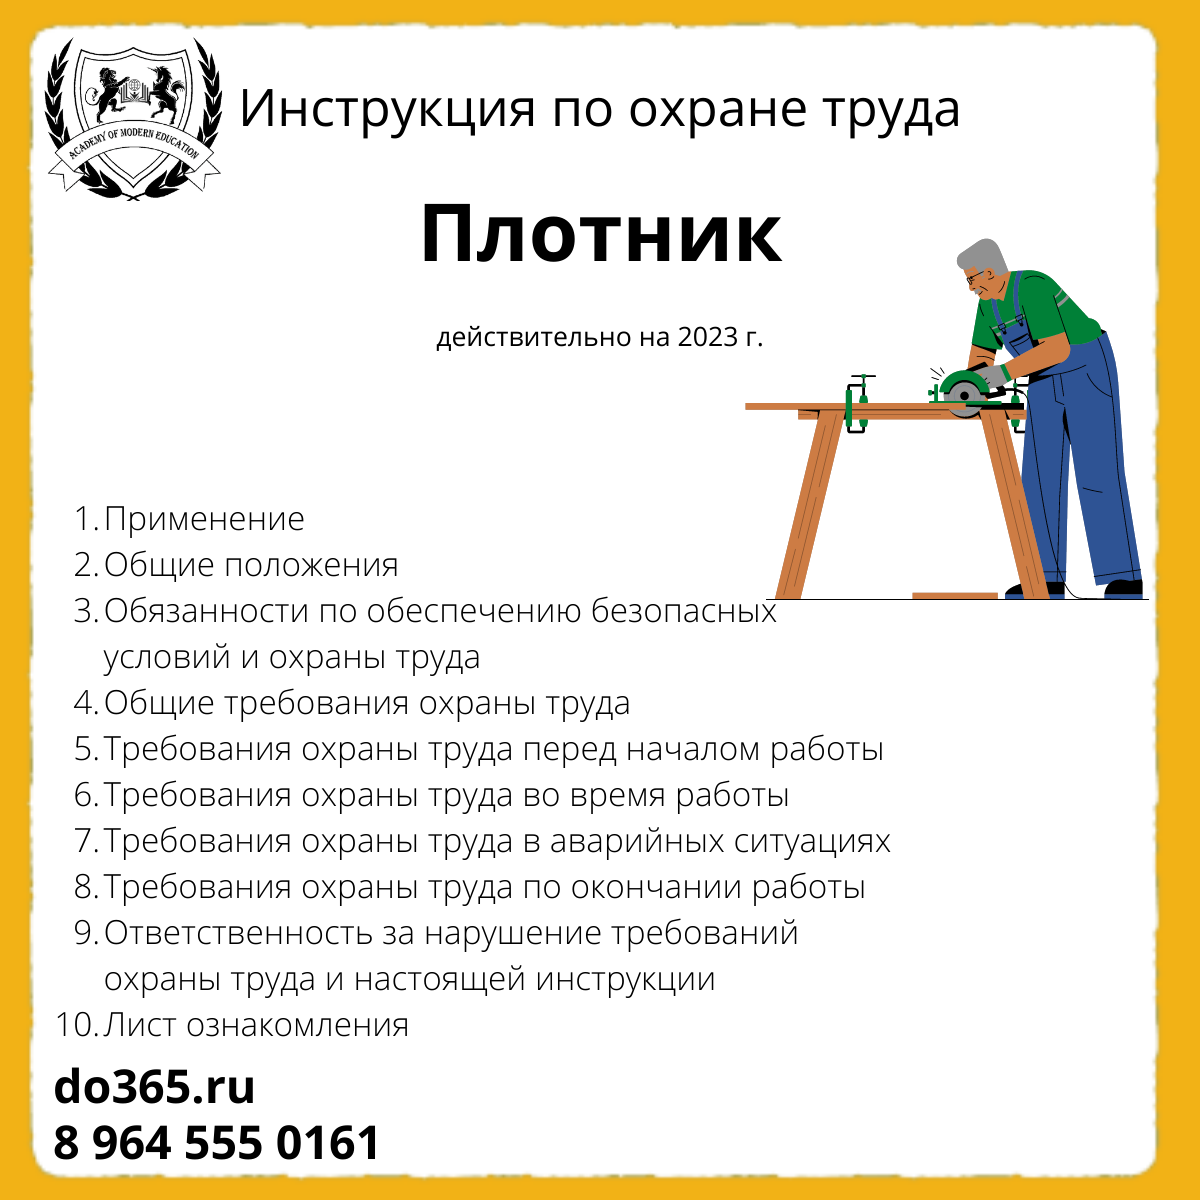 Техника безопасности плотника. Плакаты по охране труда для плотника. Инструкция плотника. Должностная инструкция плотника по охране труда. Должностные инструкции плотников